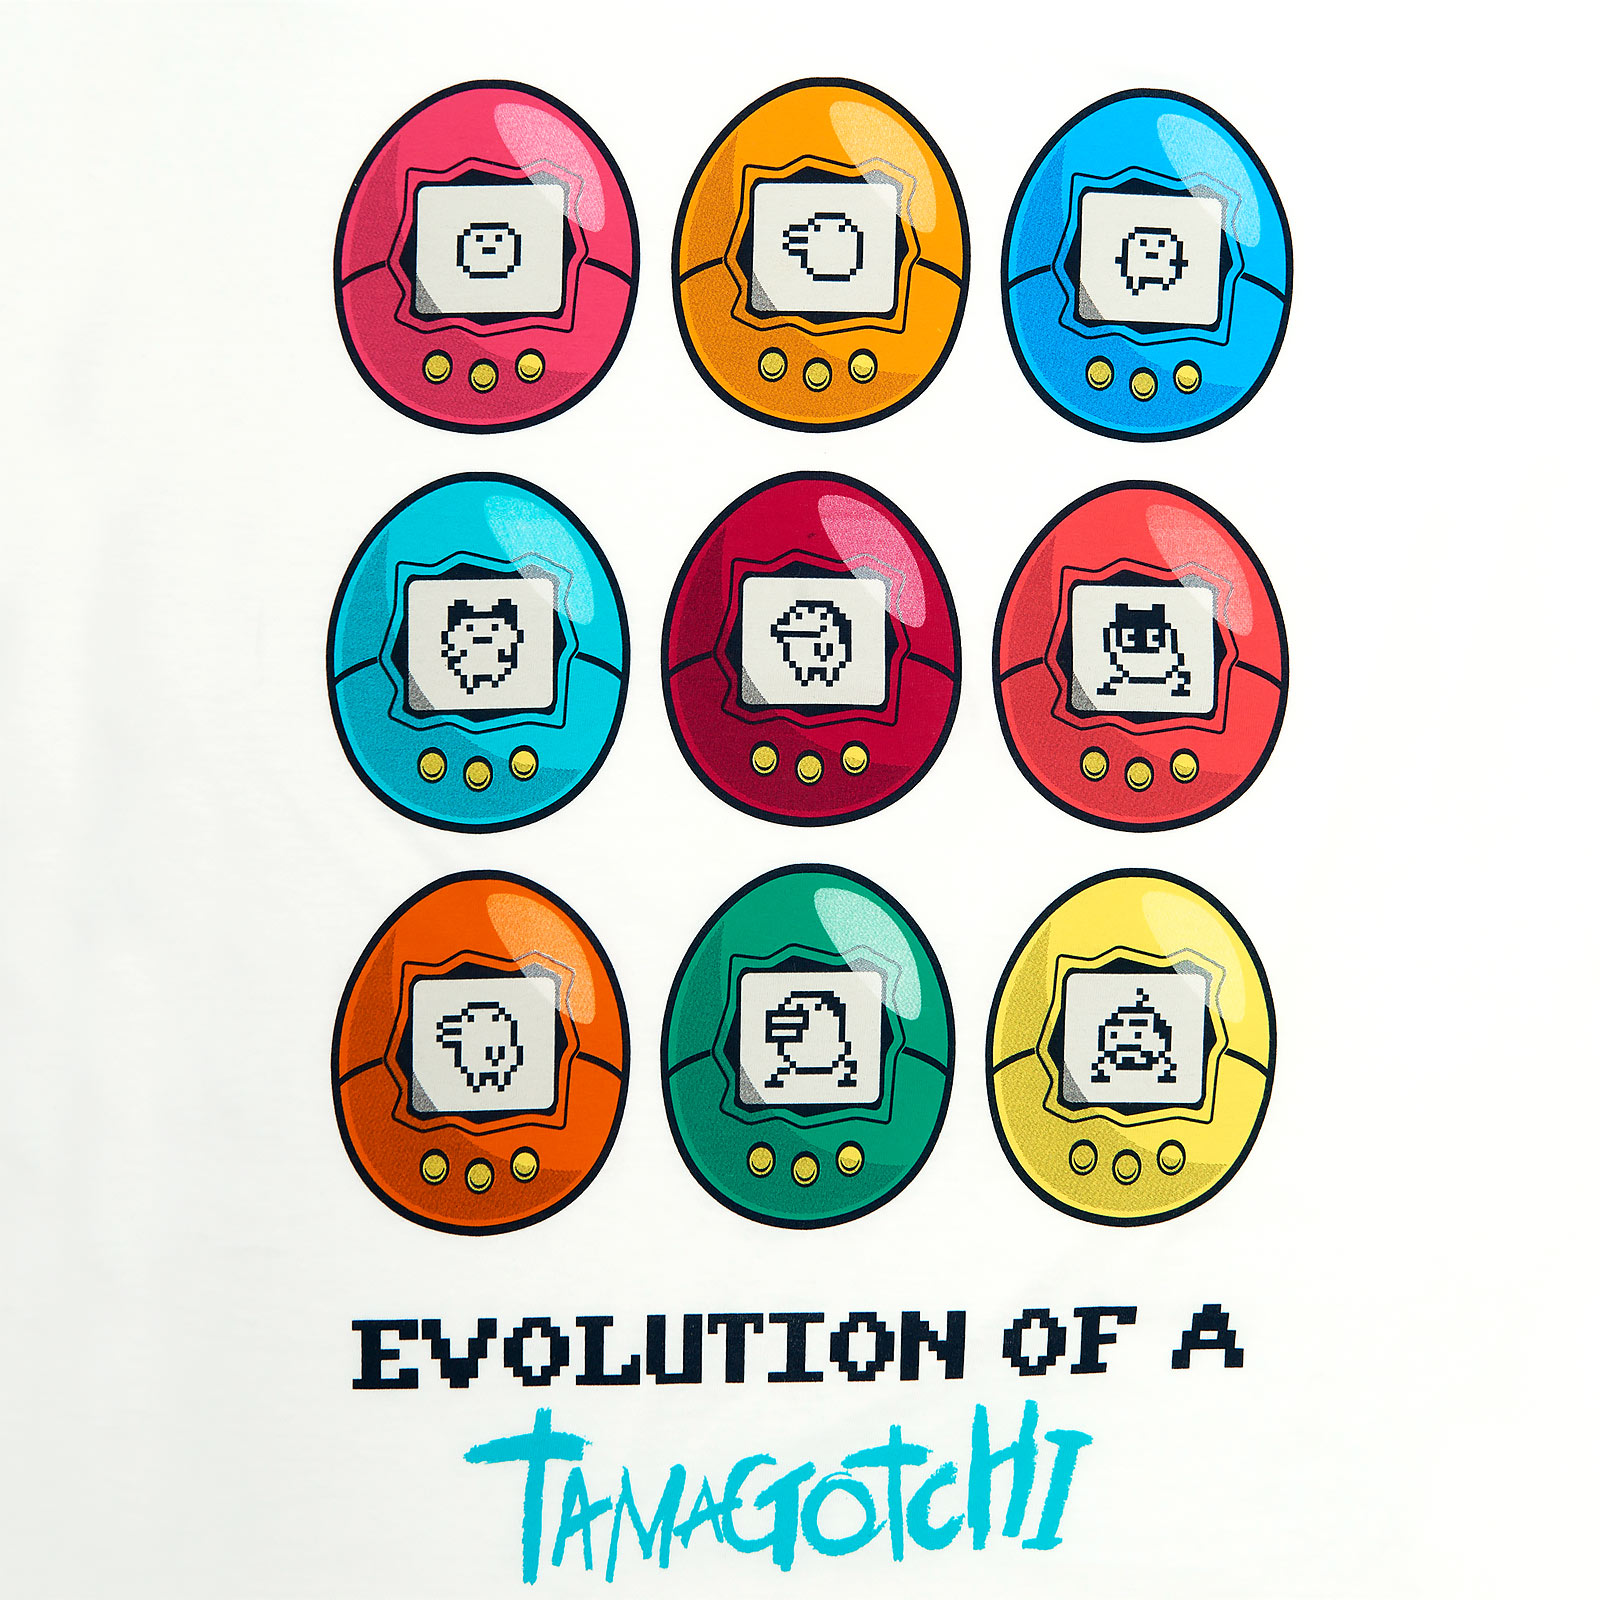 Tamagotchi - Evolution of a Tamagotchi T-Shirt weiß